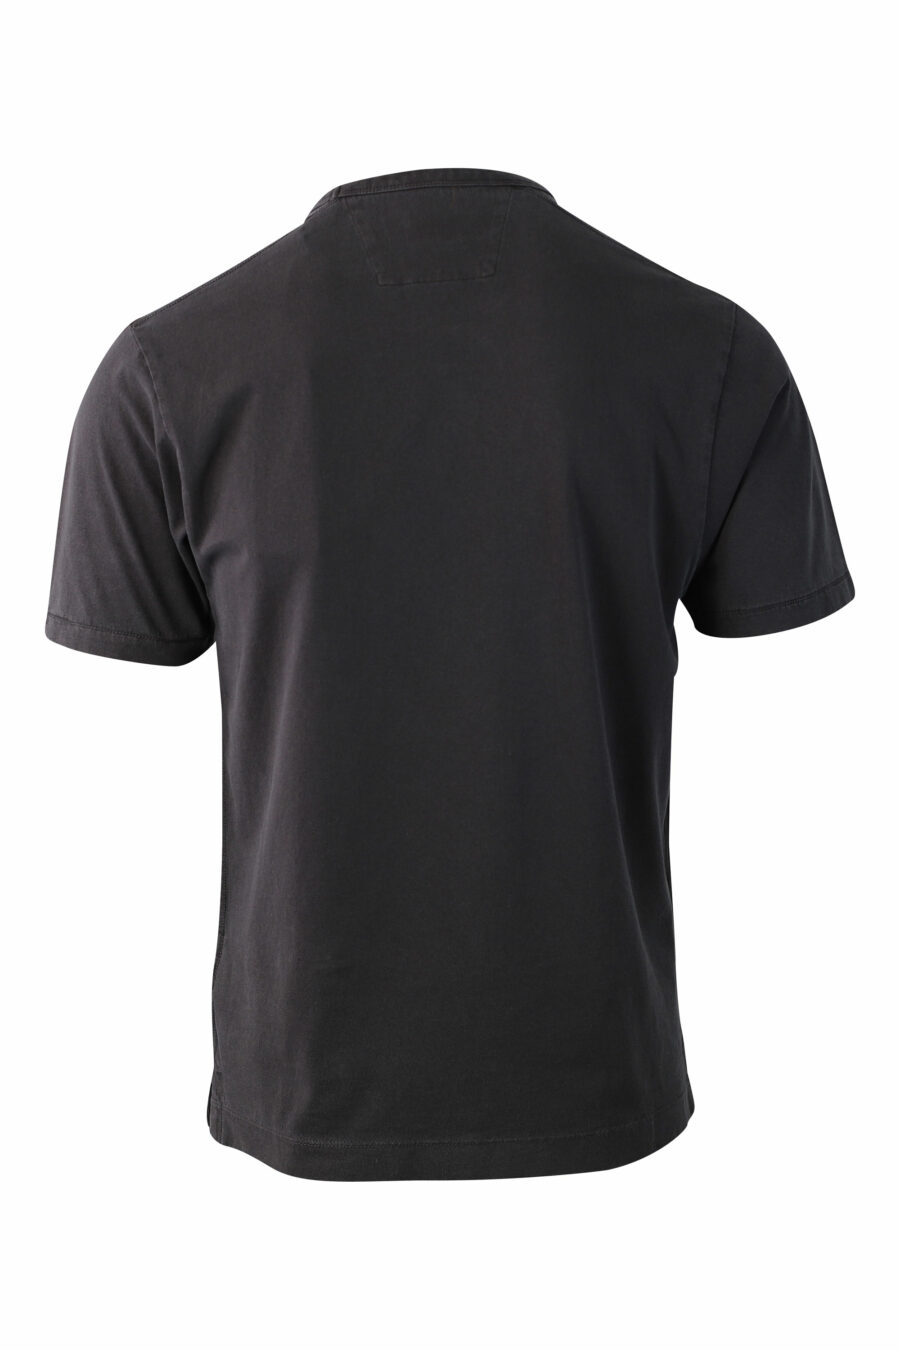 Camiseta negra con maxilogo parche - IMG 0034 1